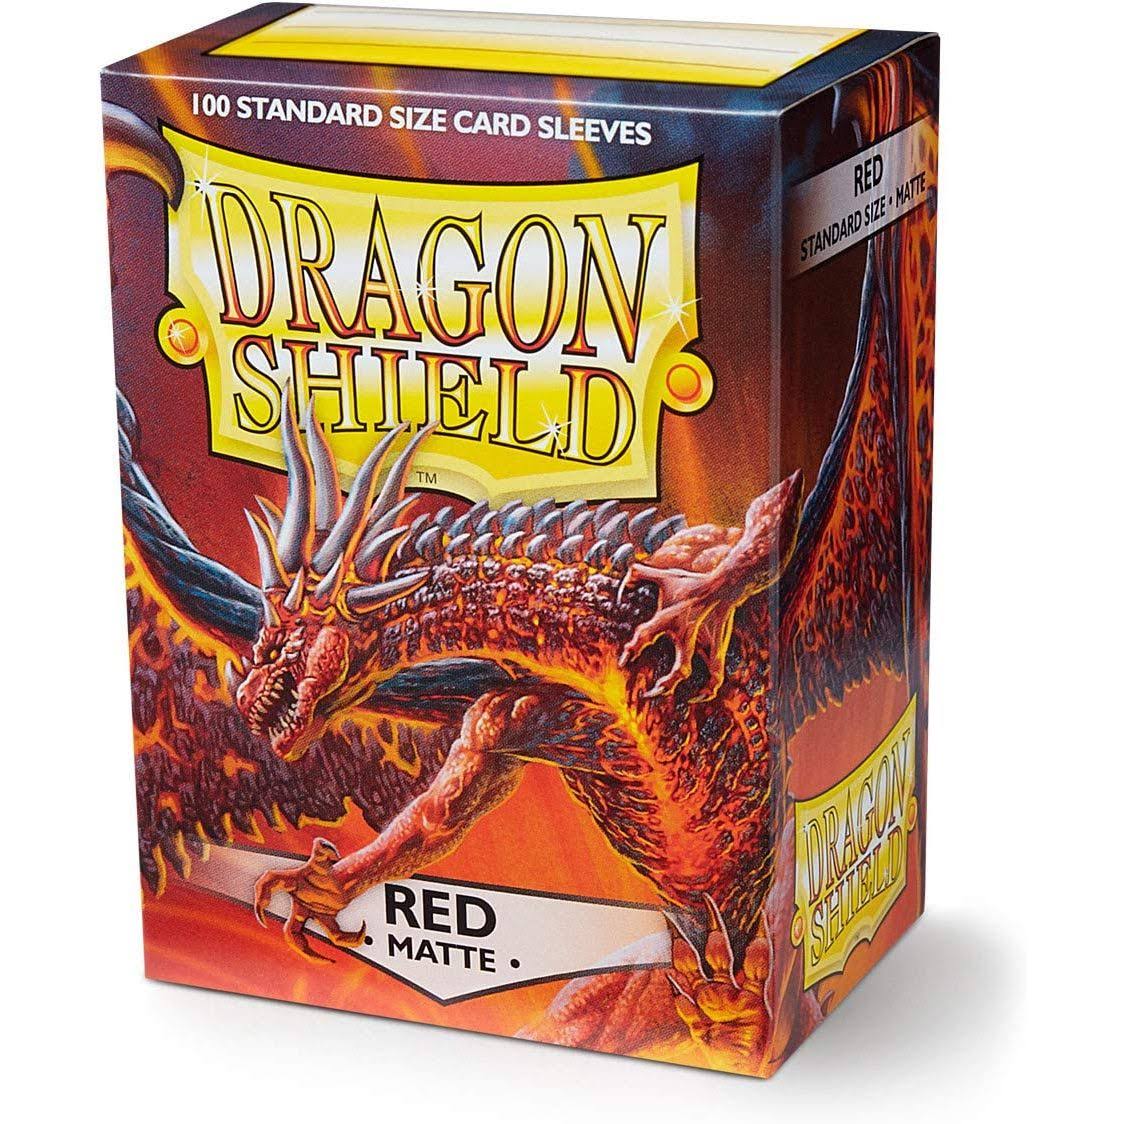 Dragon Shield Matte Red - 100 Pack